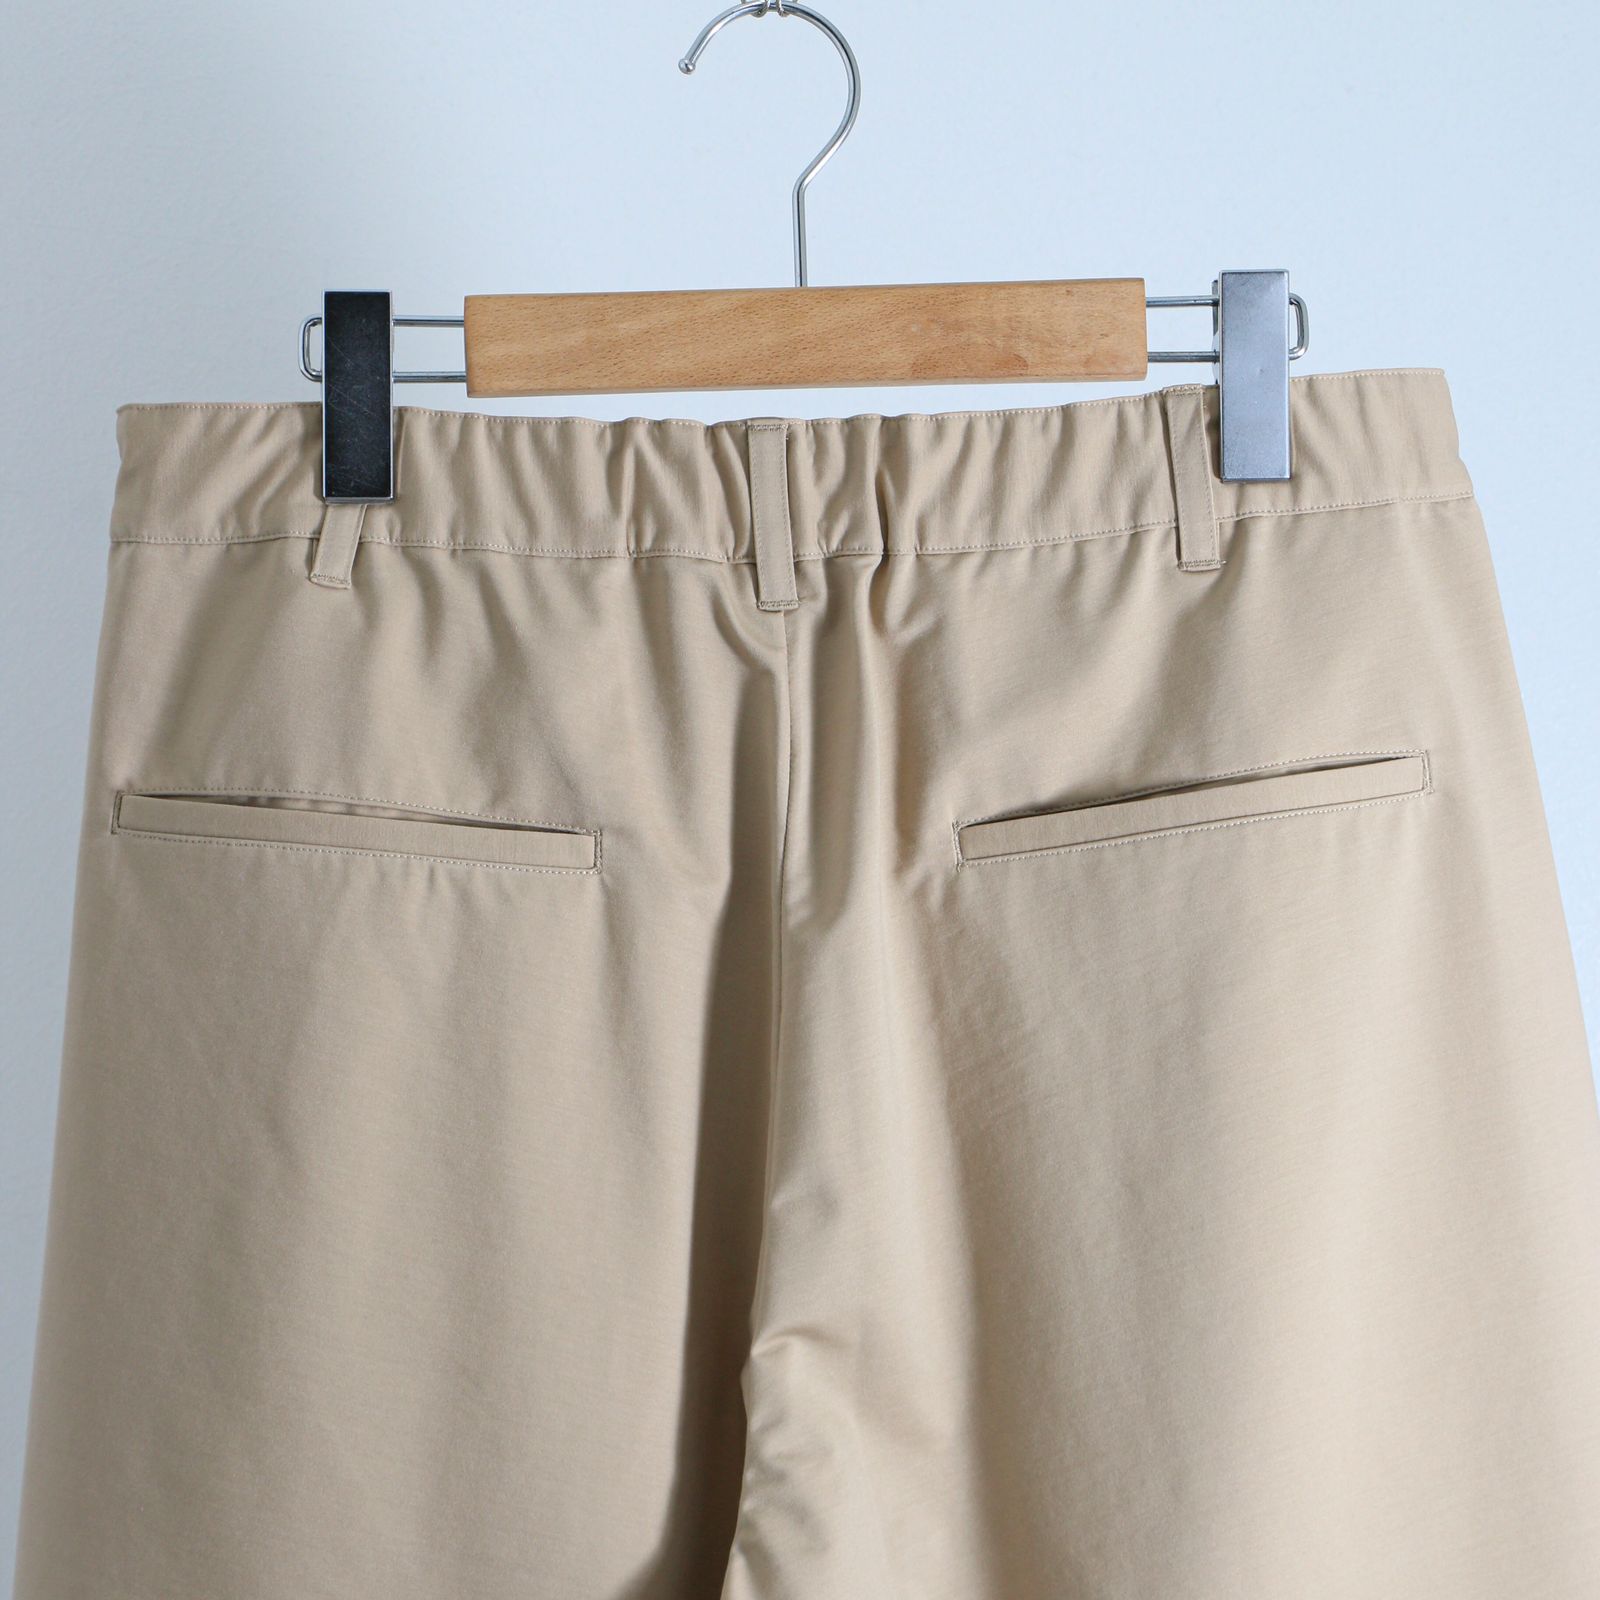 KANEMASA PHIL. - 46G Typewriter Jersey 2Tuck shorts BEIGE / ツータック / ショーツ |  koko